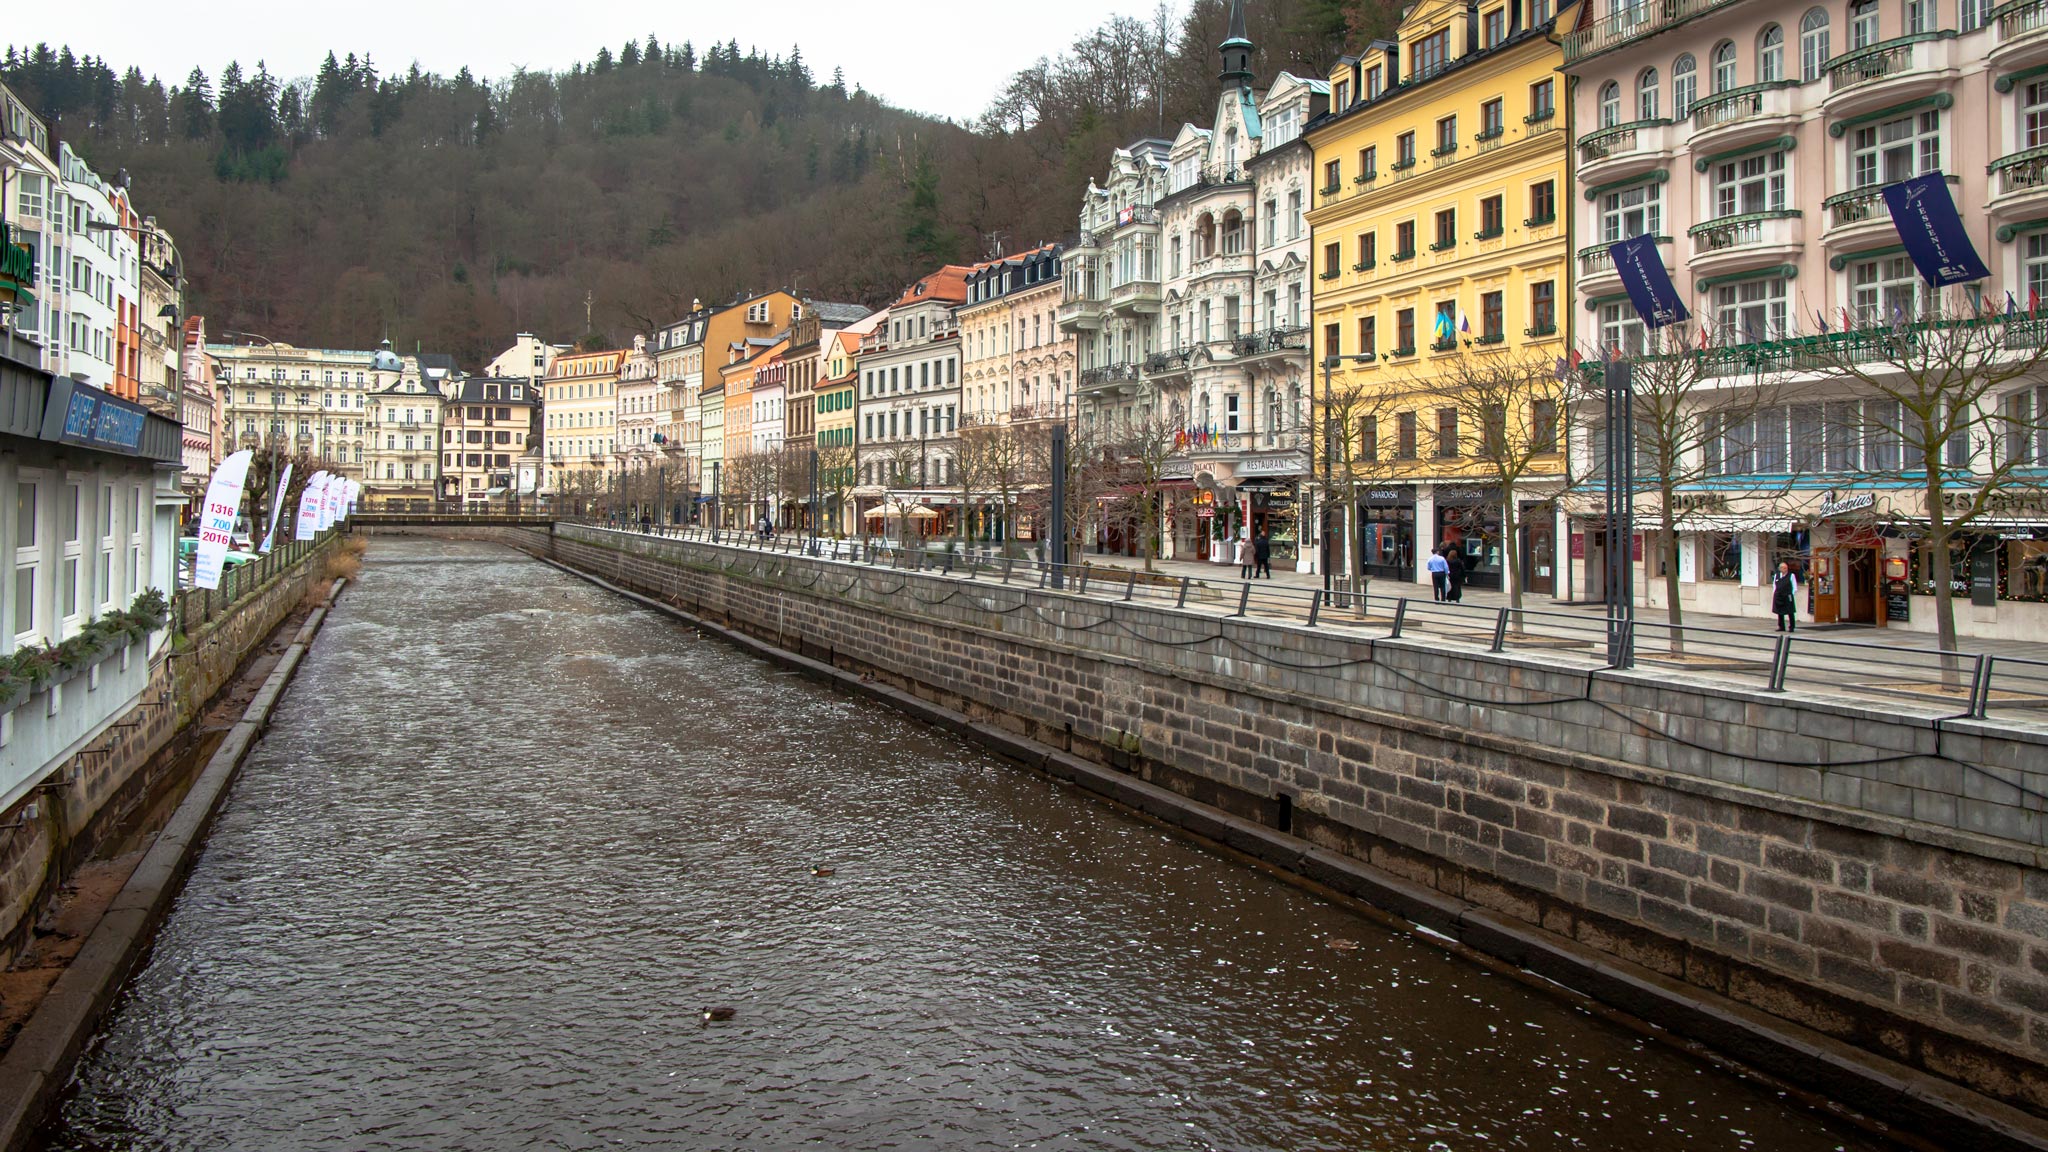 The Tepla river running through Karlovy Vary